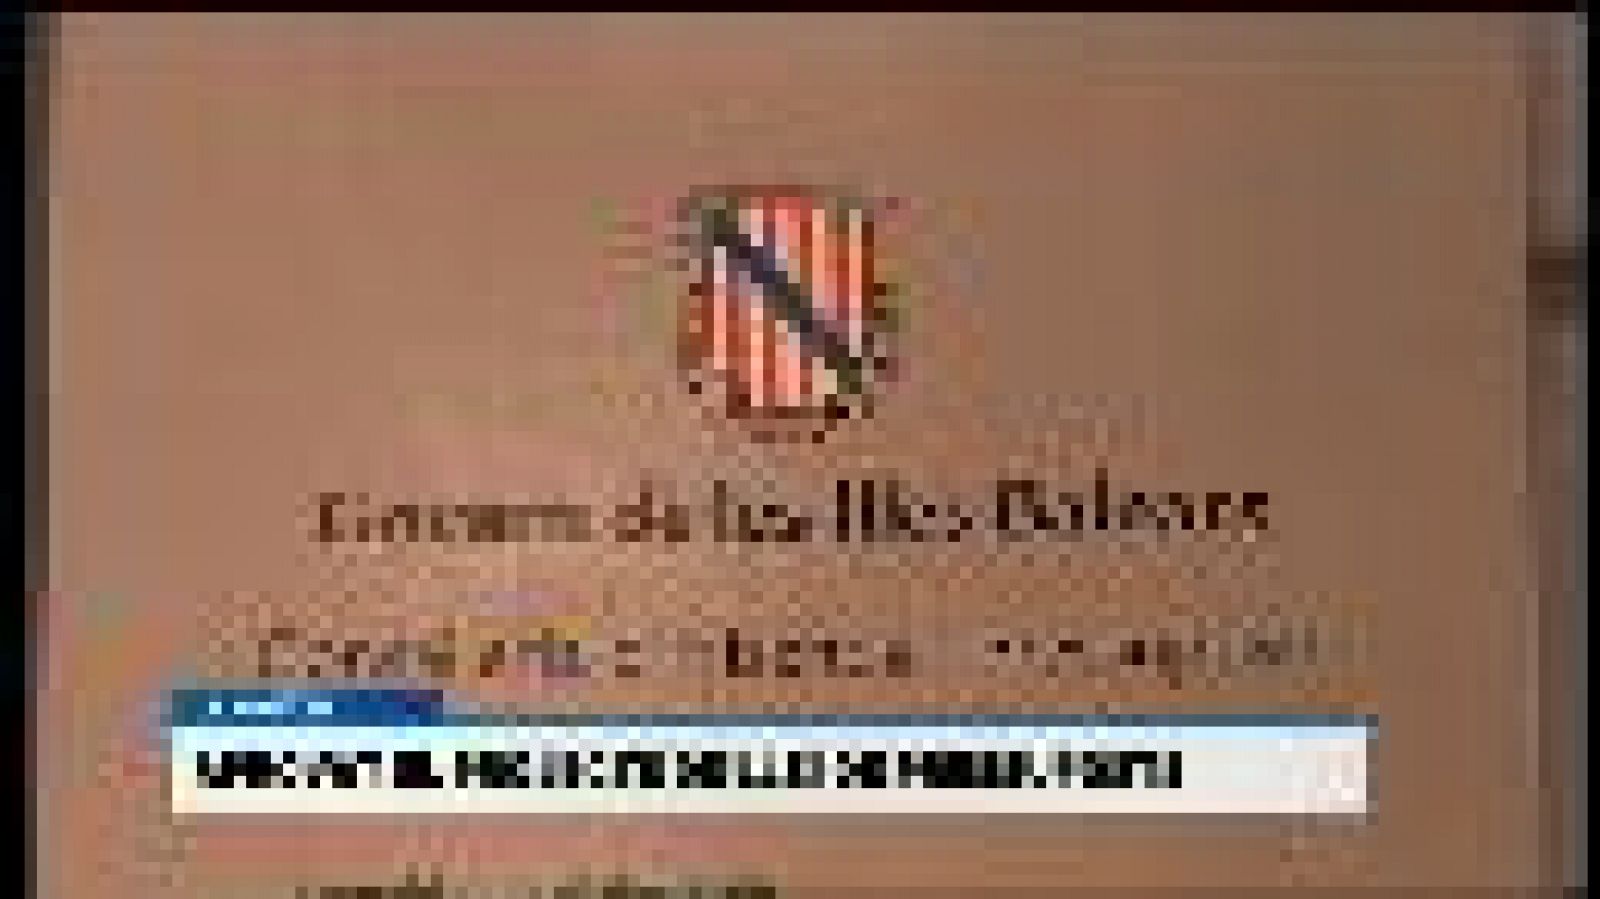 Informatiu Balear: Informatiu Balear en 2' - 28/10/16 | RTVE Play